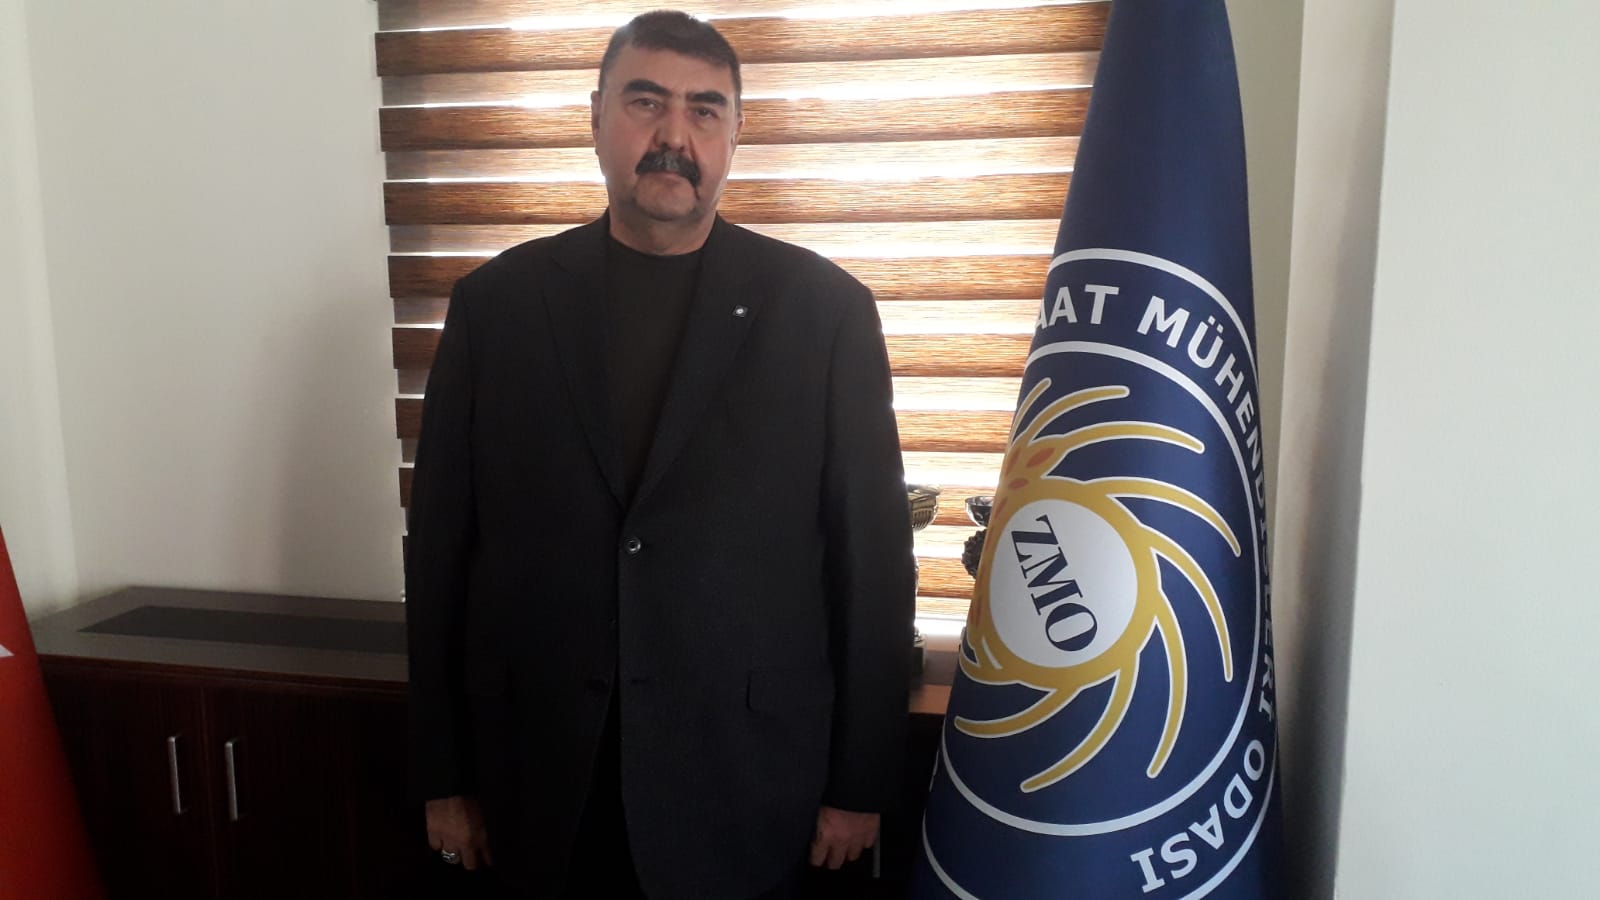 TMMOB Gaziantep: Gaziantep Savunması tarihin seyrini değiştirmiştir